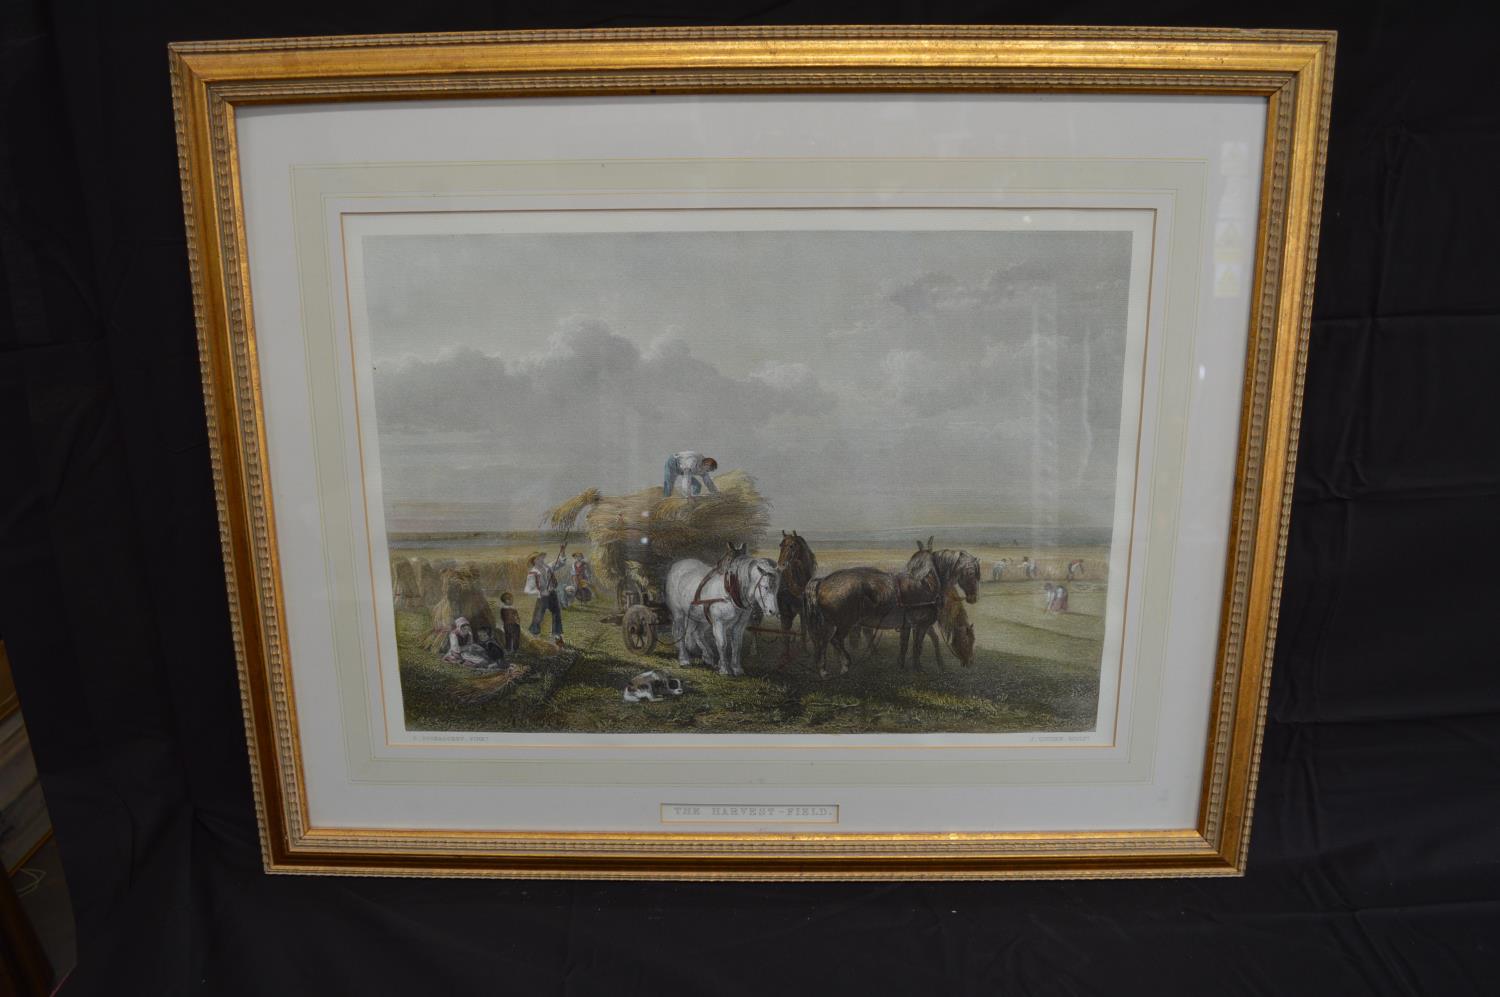 J Cousen coloured engraving titled The Harvest-Field - 53cm x 38cm in mounted glazed gilt frame